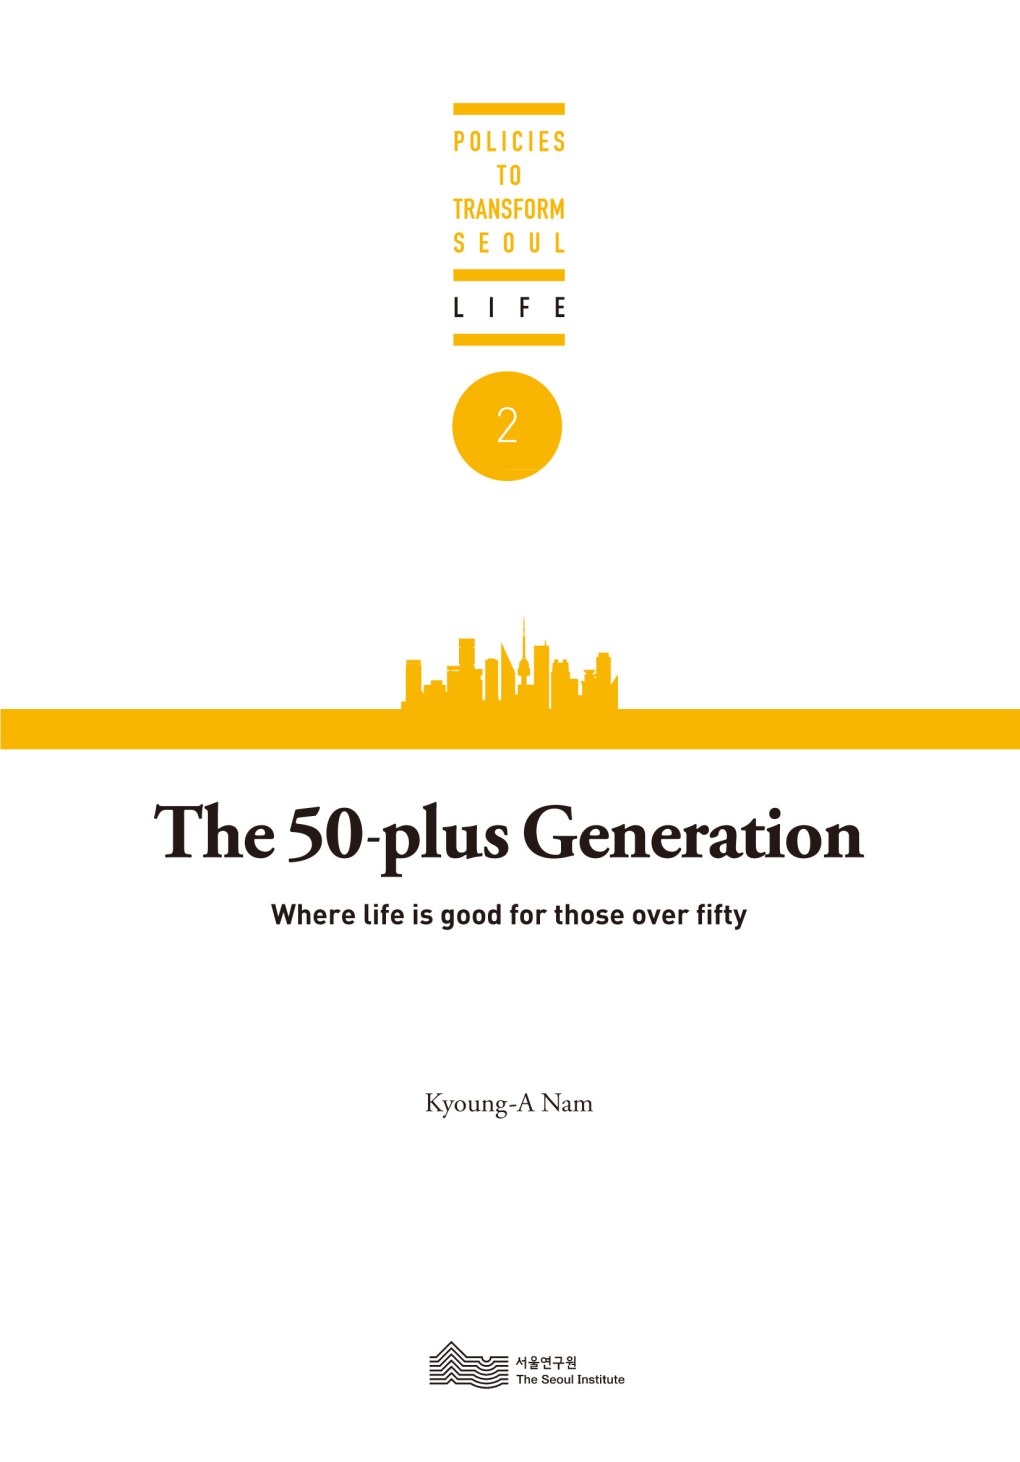 The 50-Plus Generation Seoul Institute Kyoung-A Nam 2017.Pdf